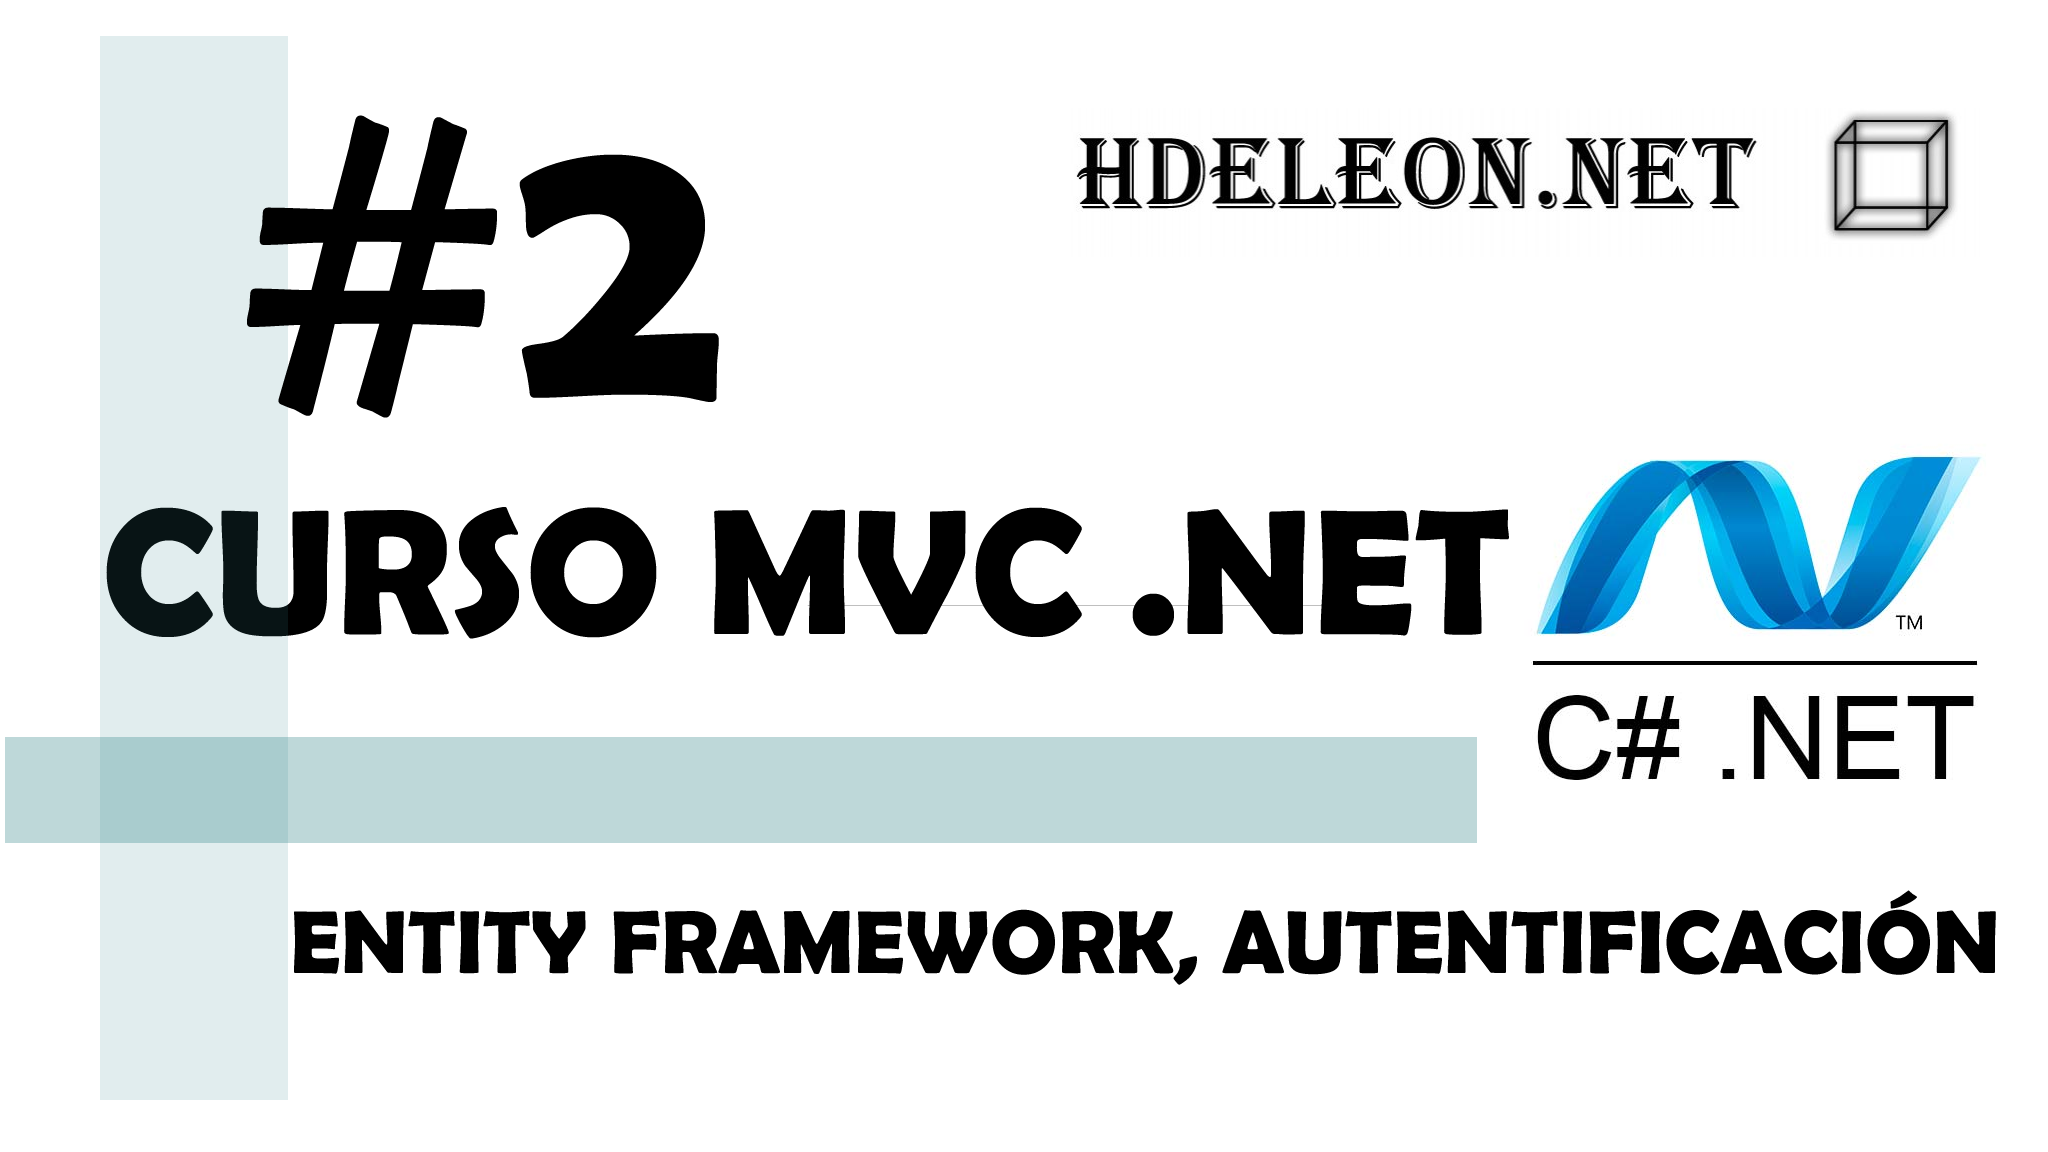 Curso de MVC .Net C# Entity Framework, autentificación #2